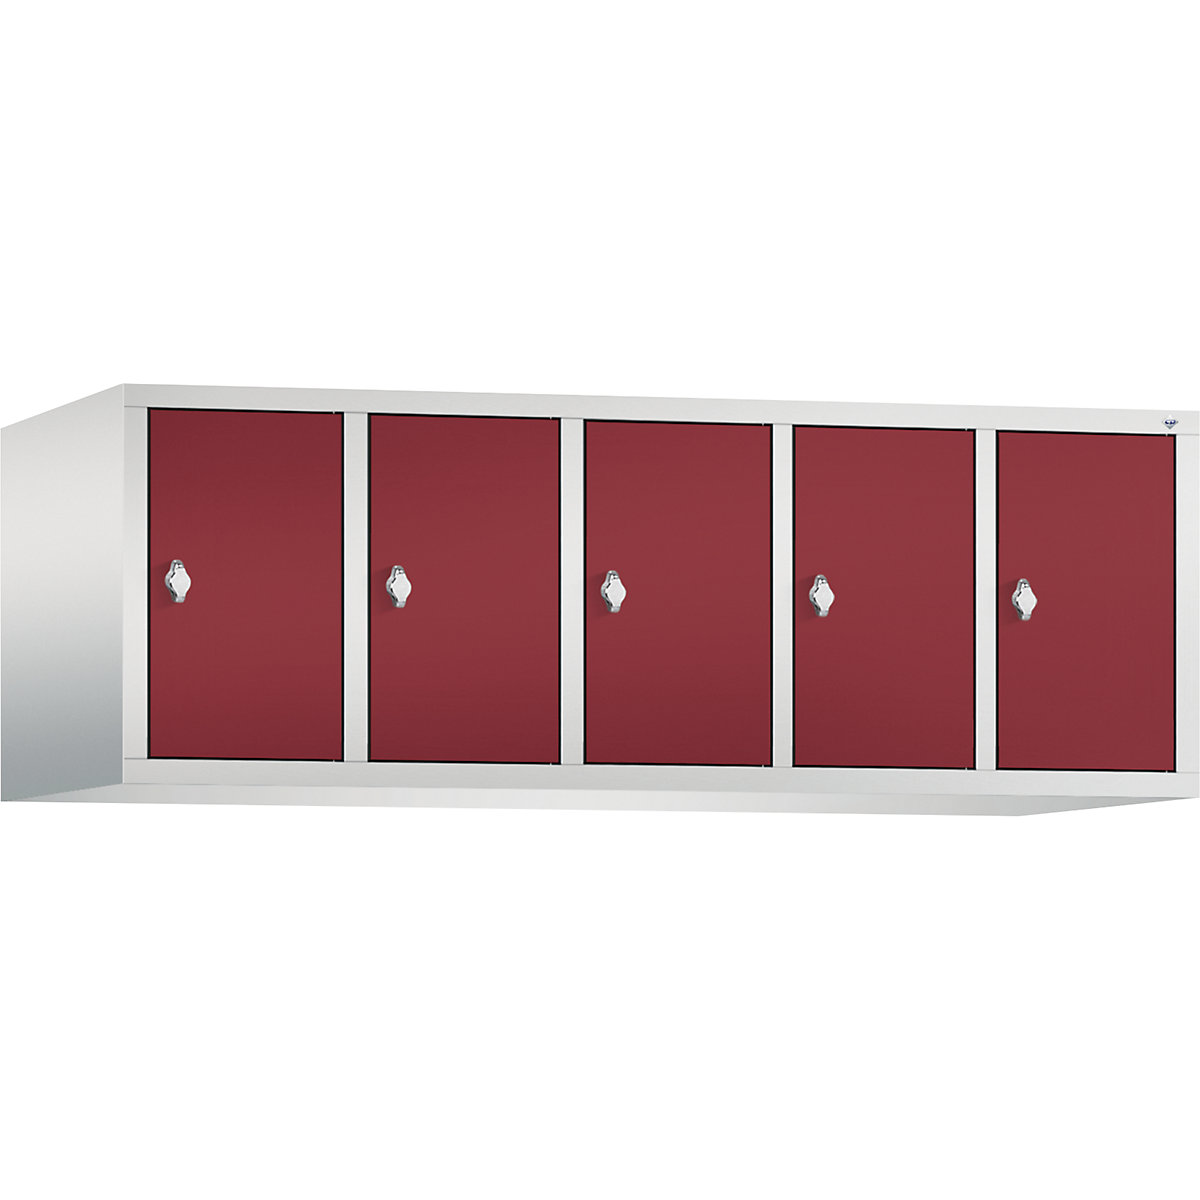 C+P – Altillo CLASSIC, 5 compartimentos, anchura de compartimento 300 mm, gris luminoso / rojo rubí